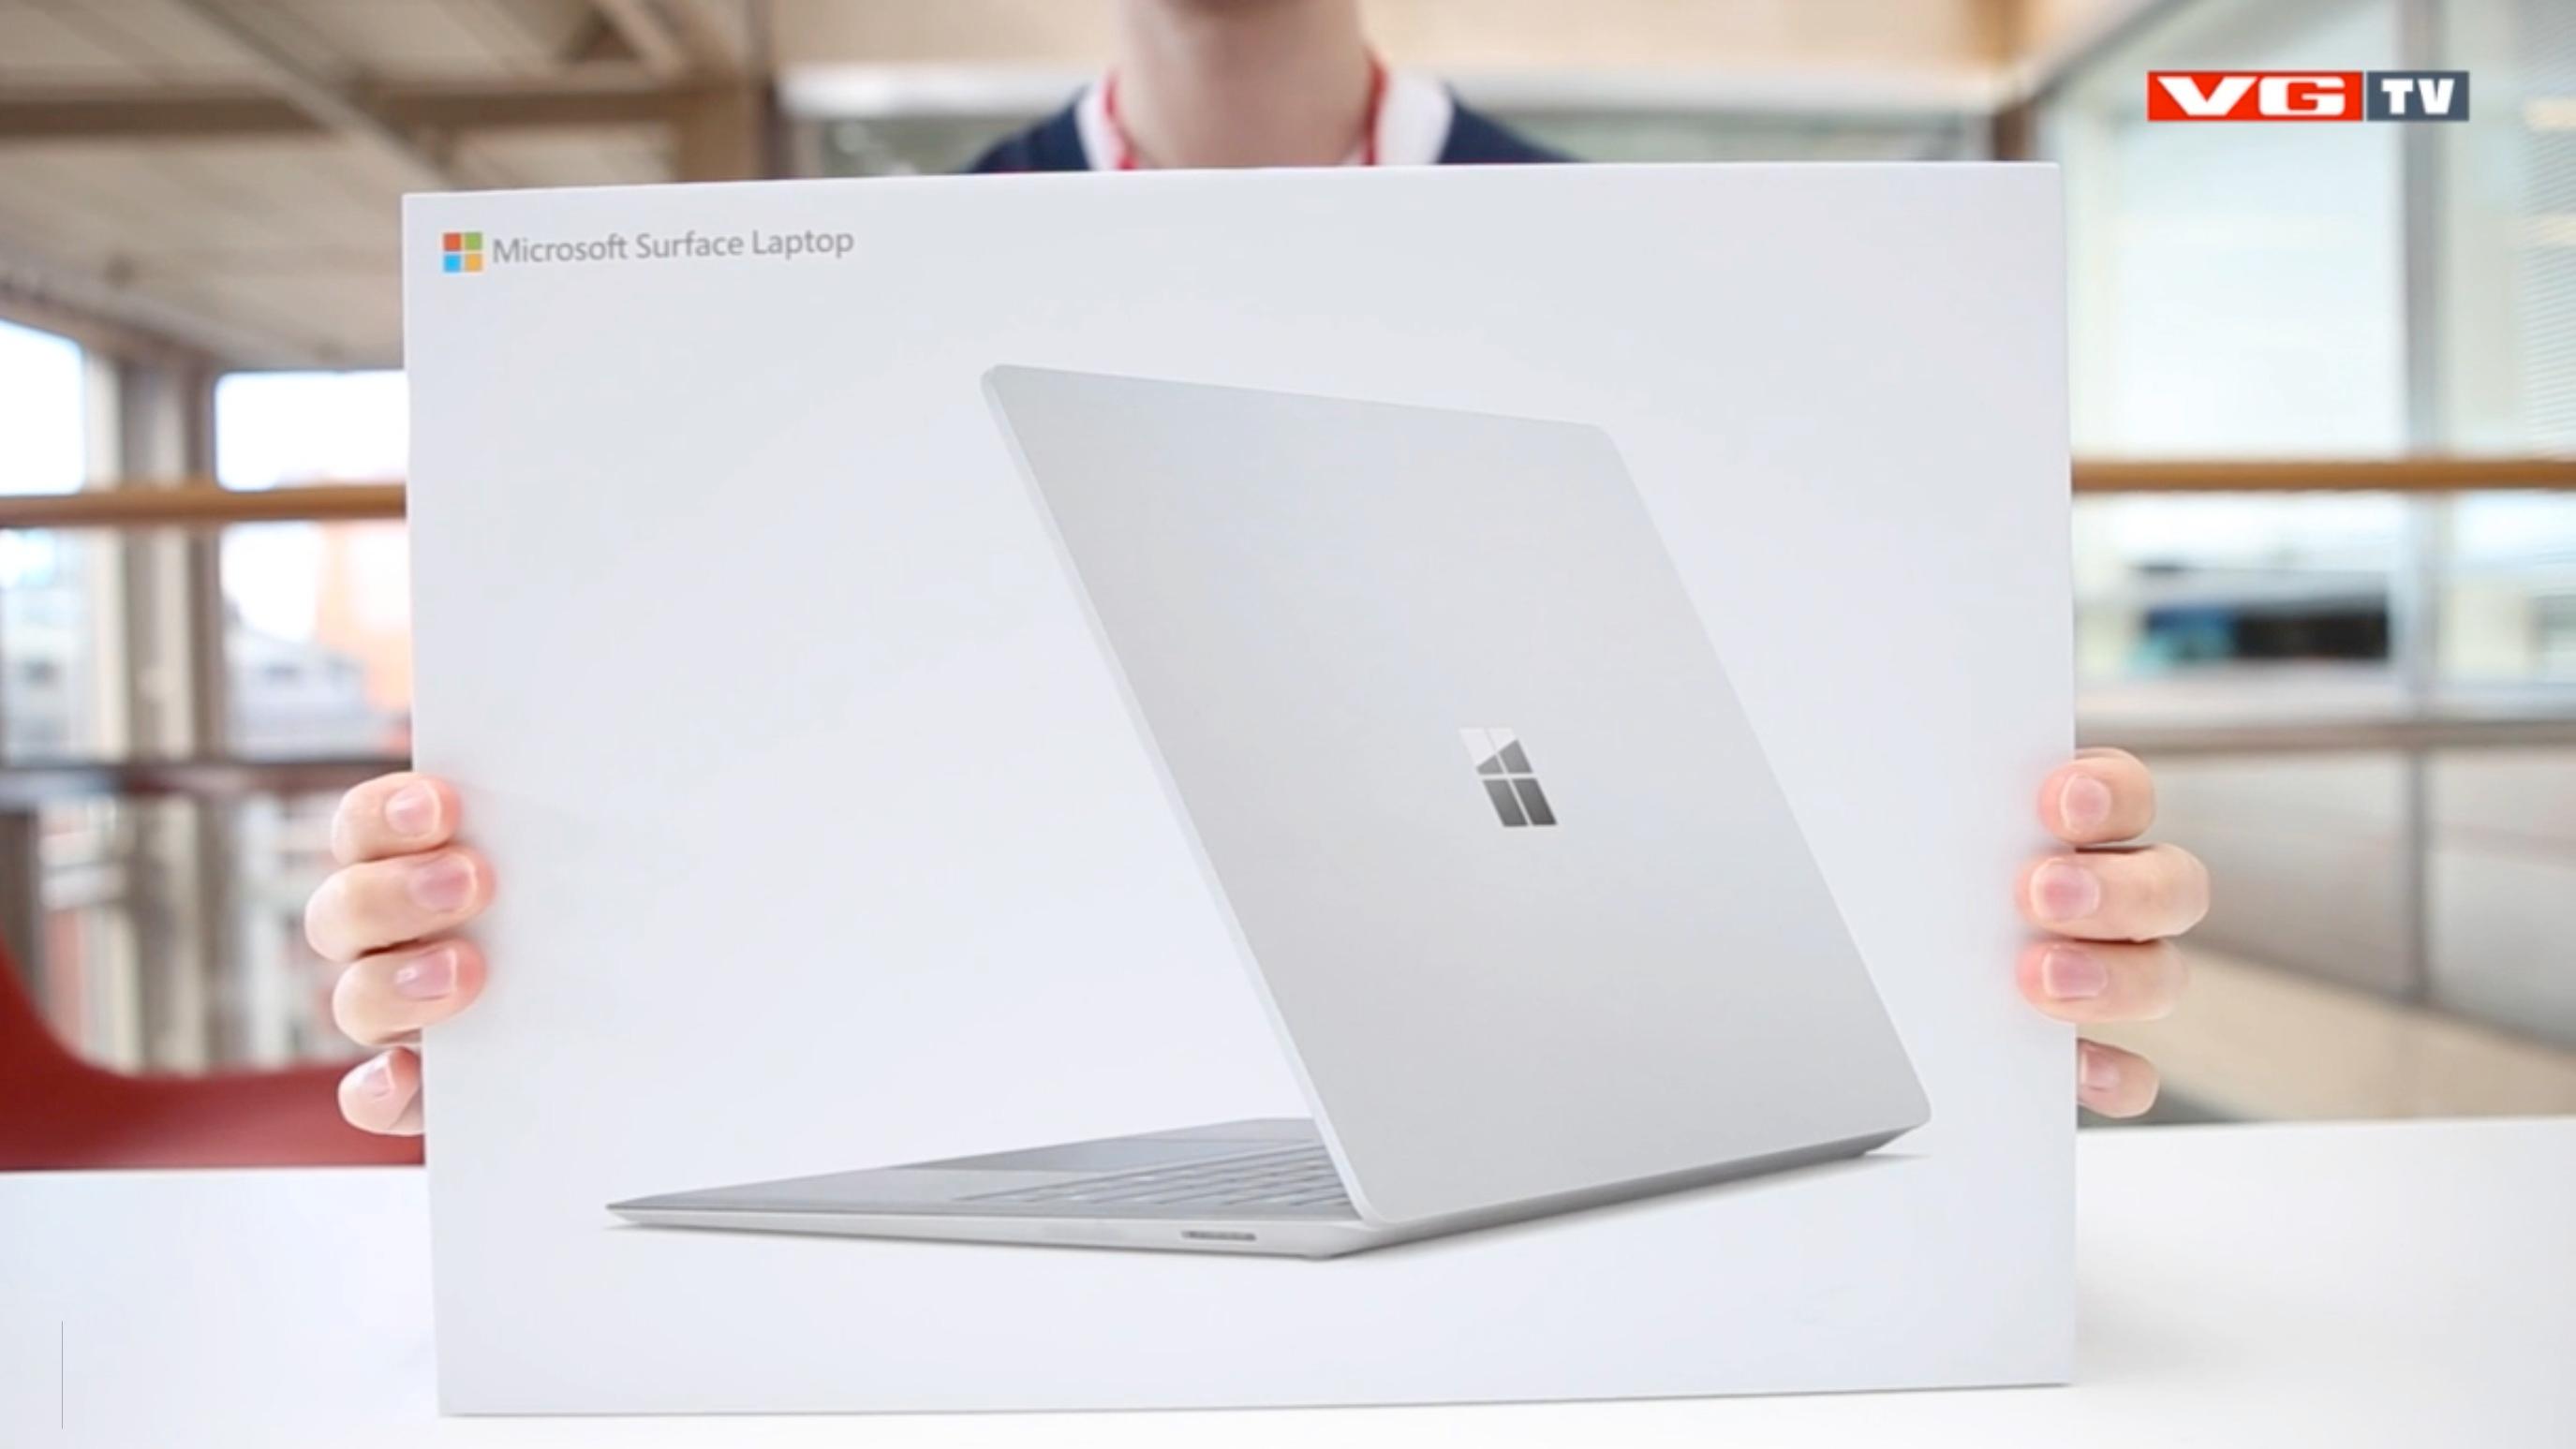 Video: Microsoft Surface Laptop